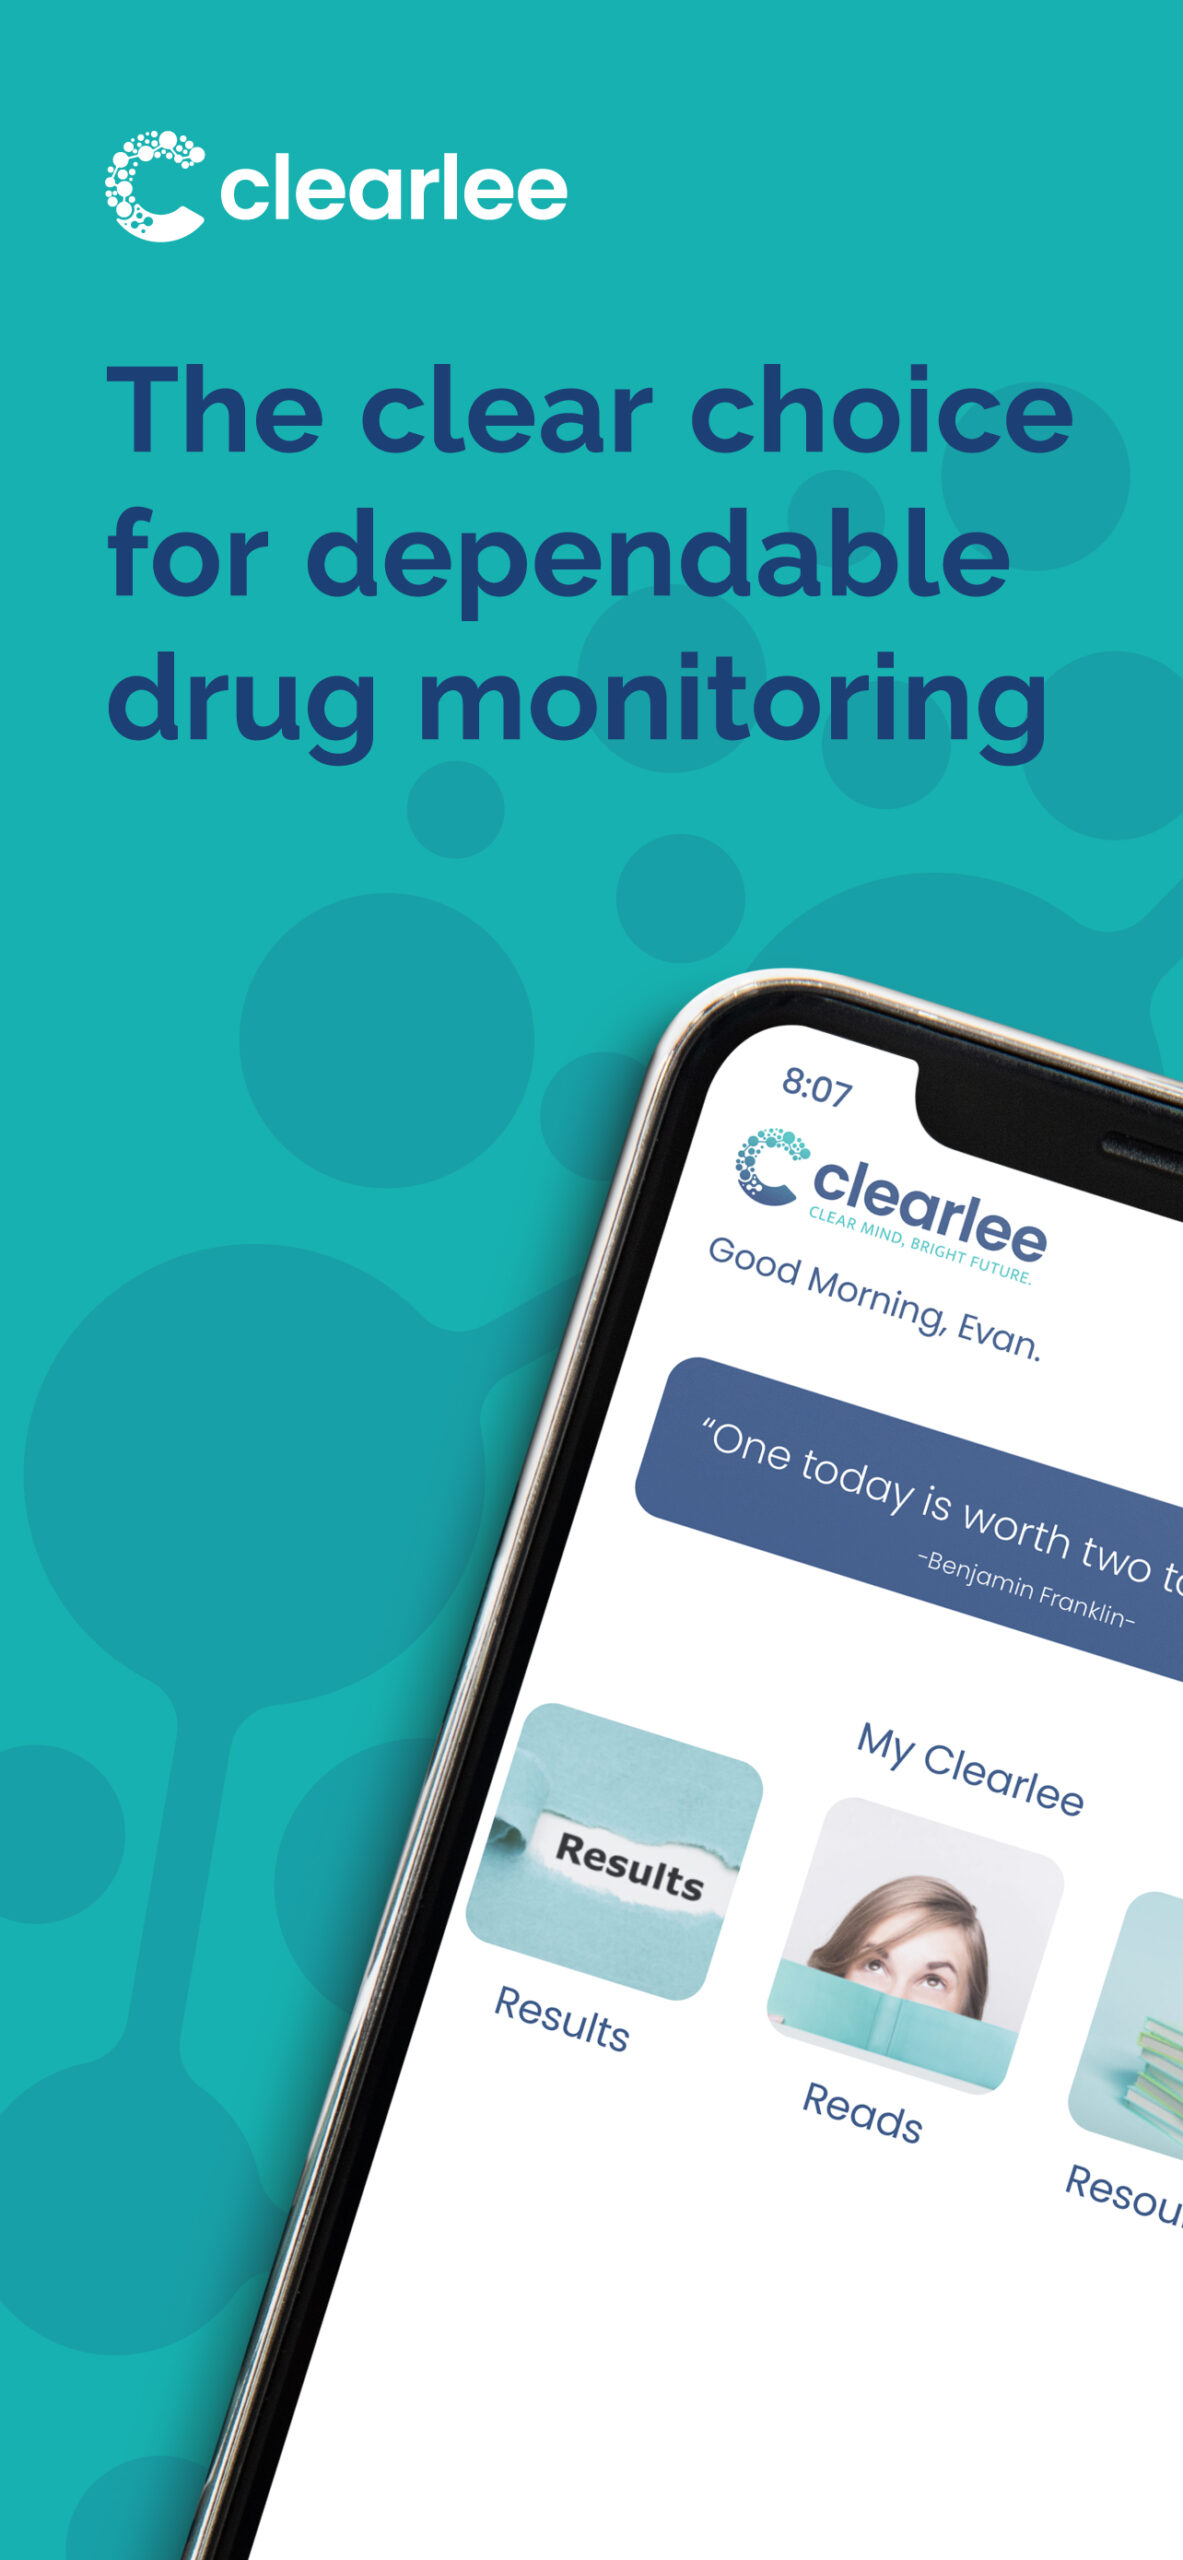 Dependable drug monitoring